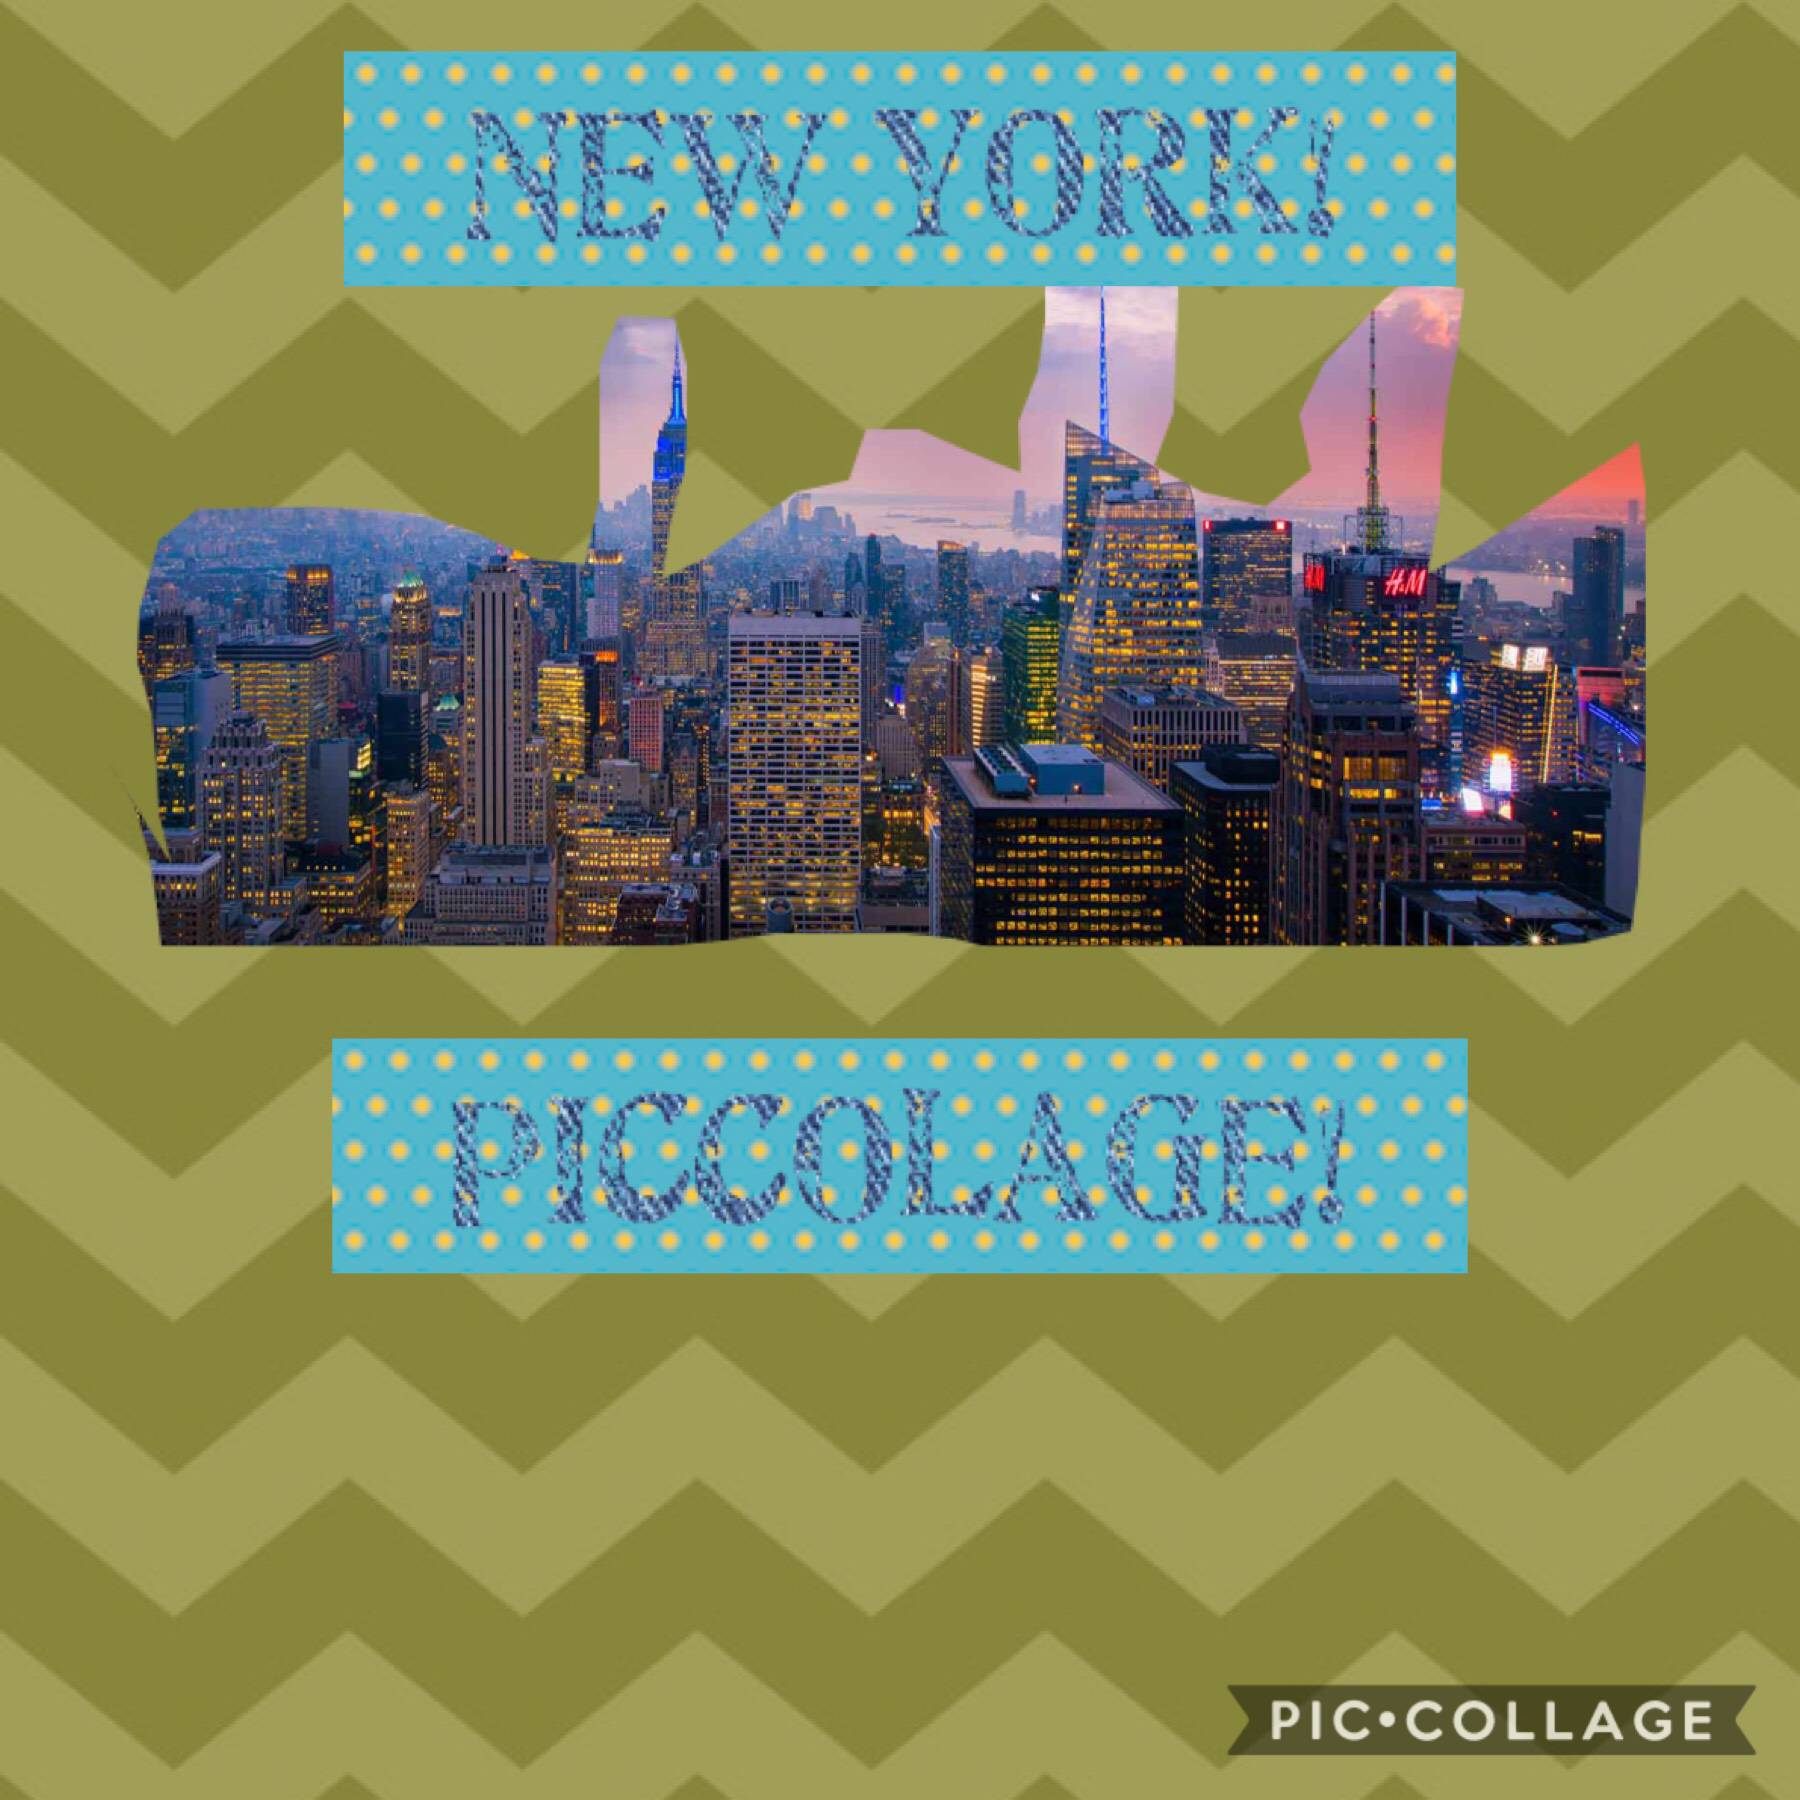 My New York Skyline!